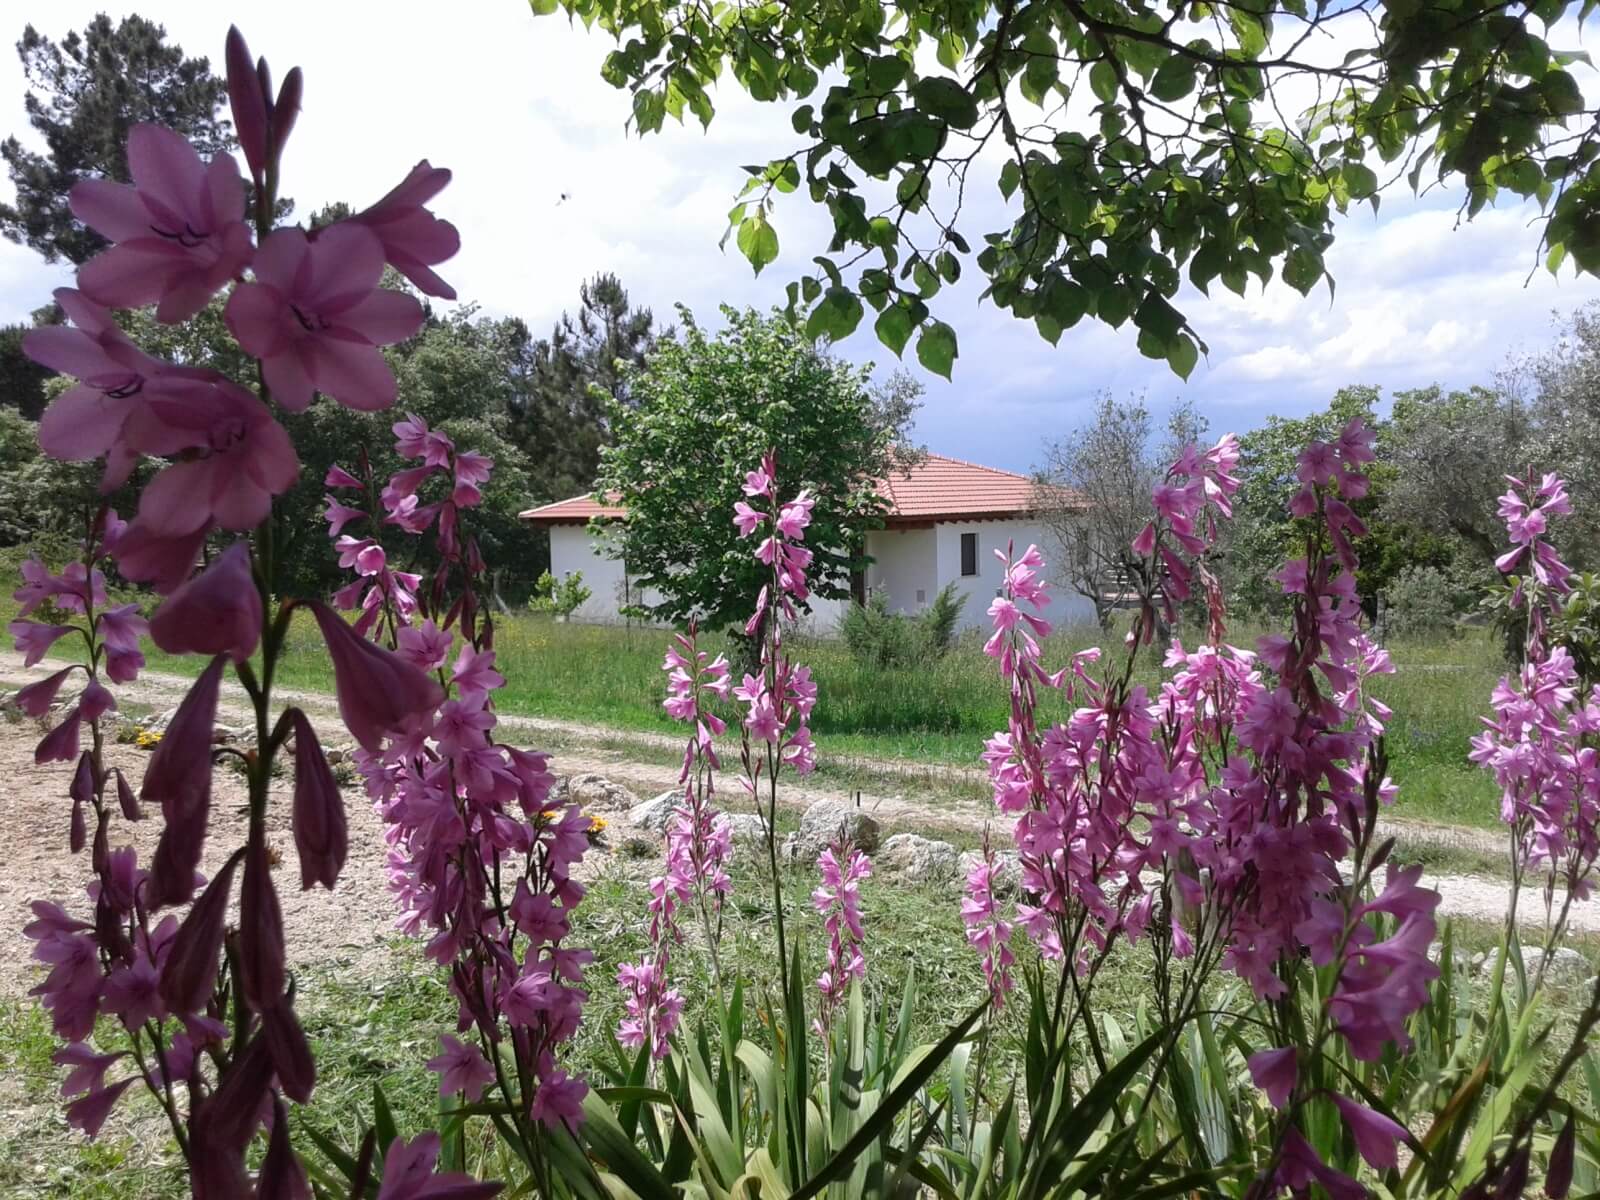 Casa da Mina with pink flowers